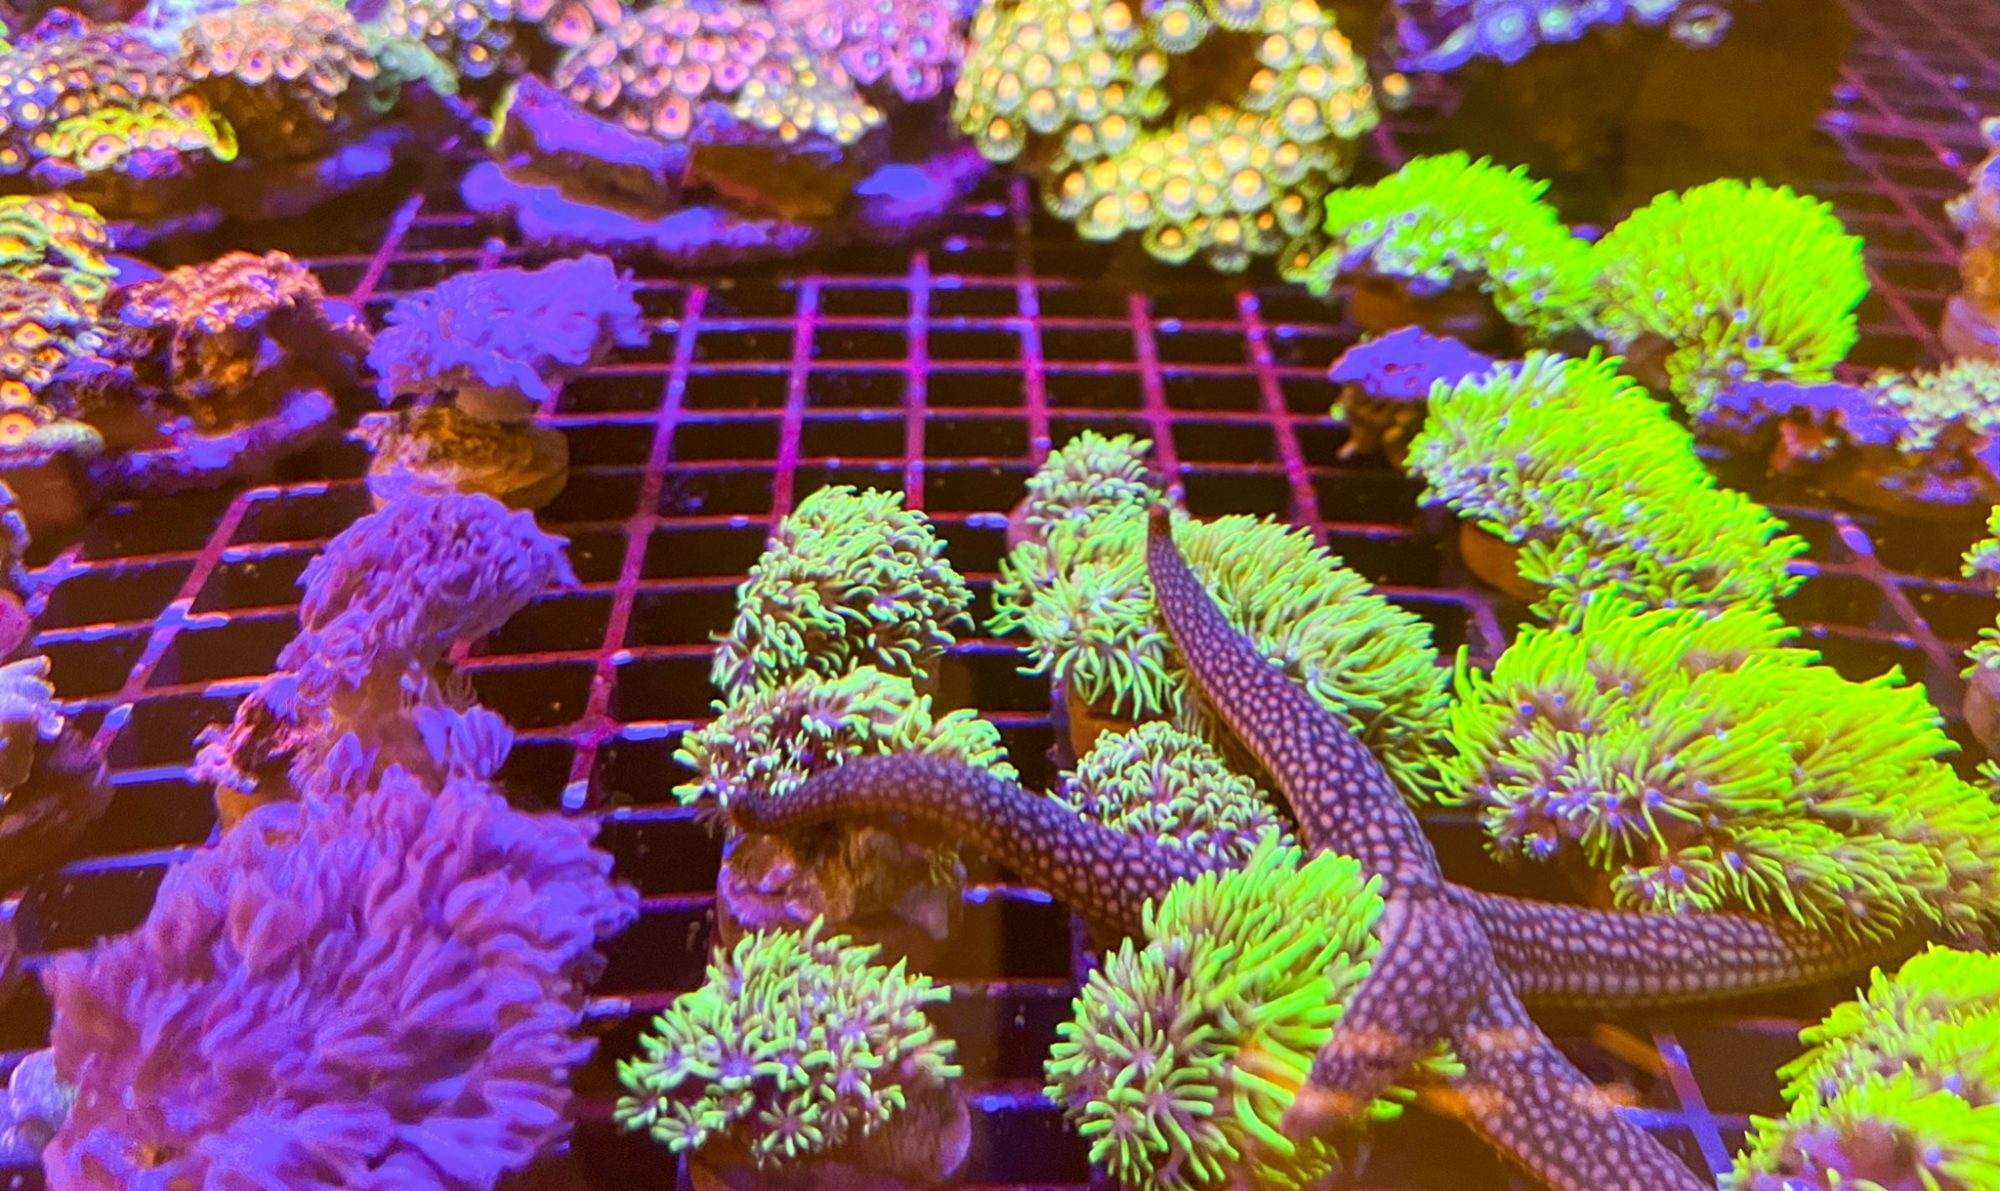 Colourful coral in aquarium with star fish